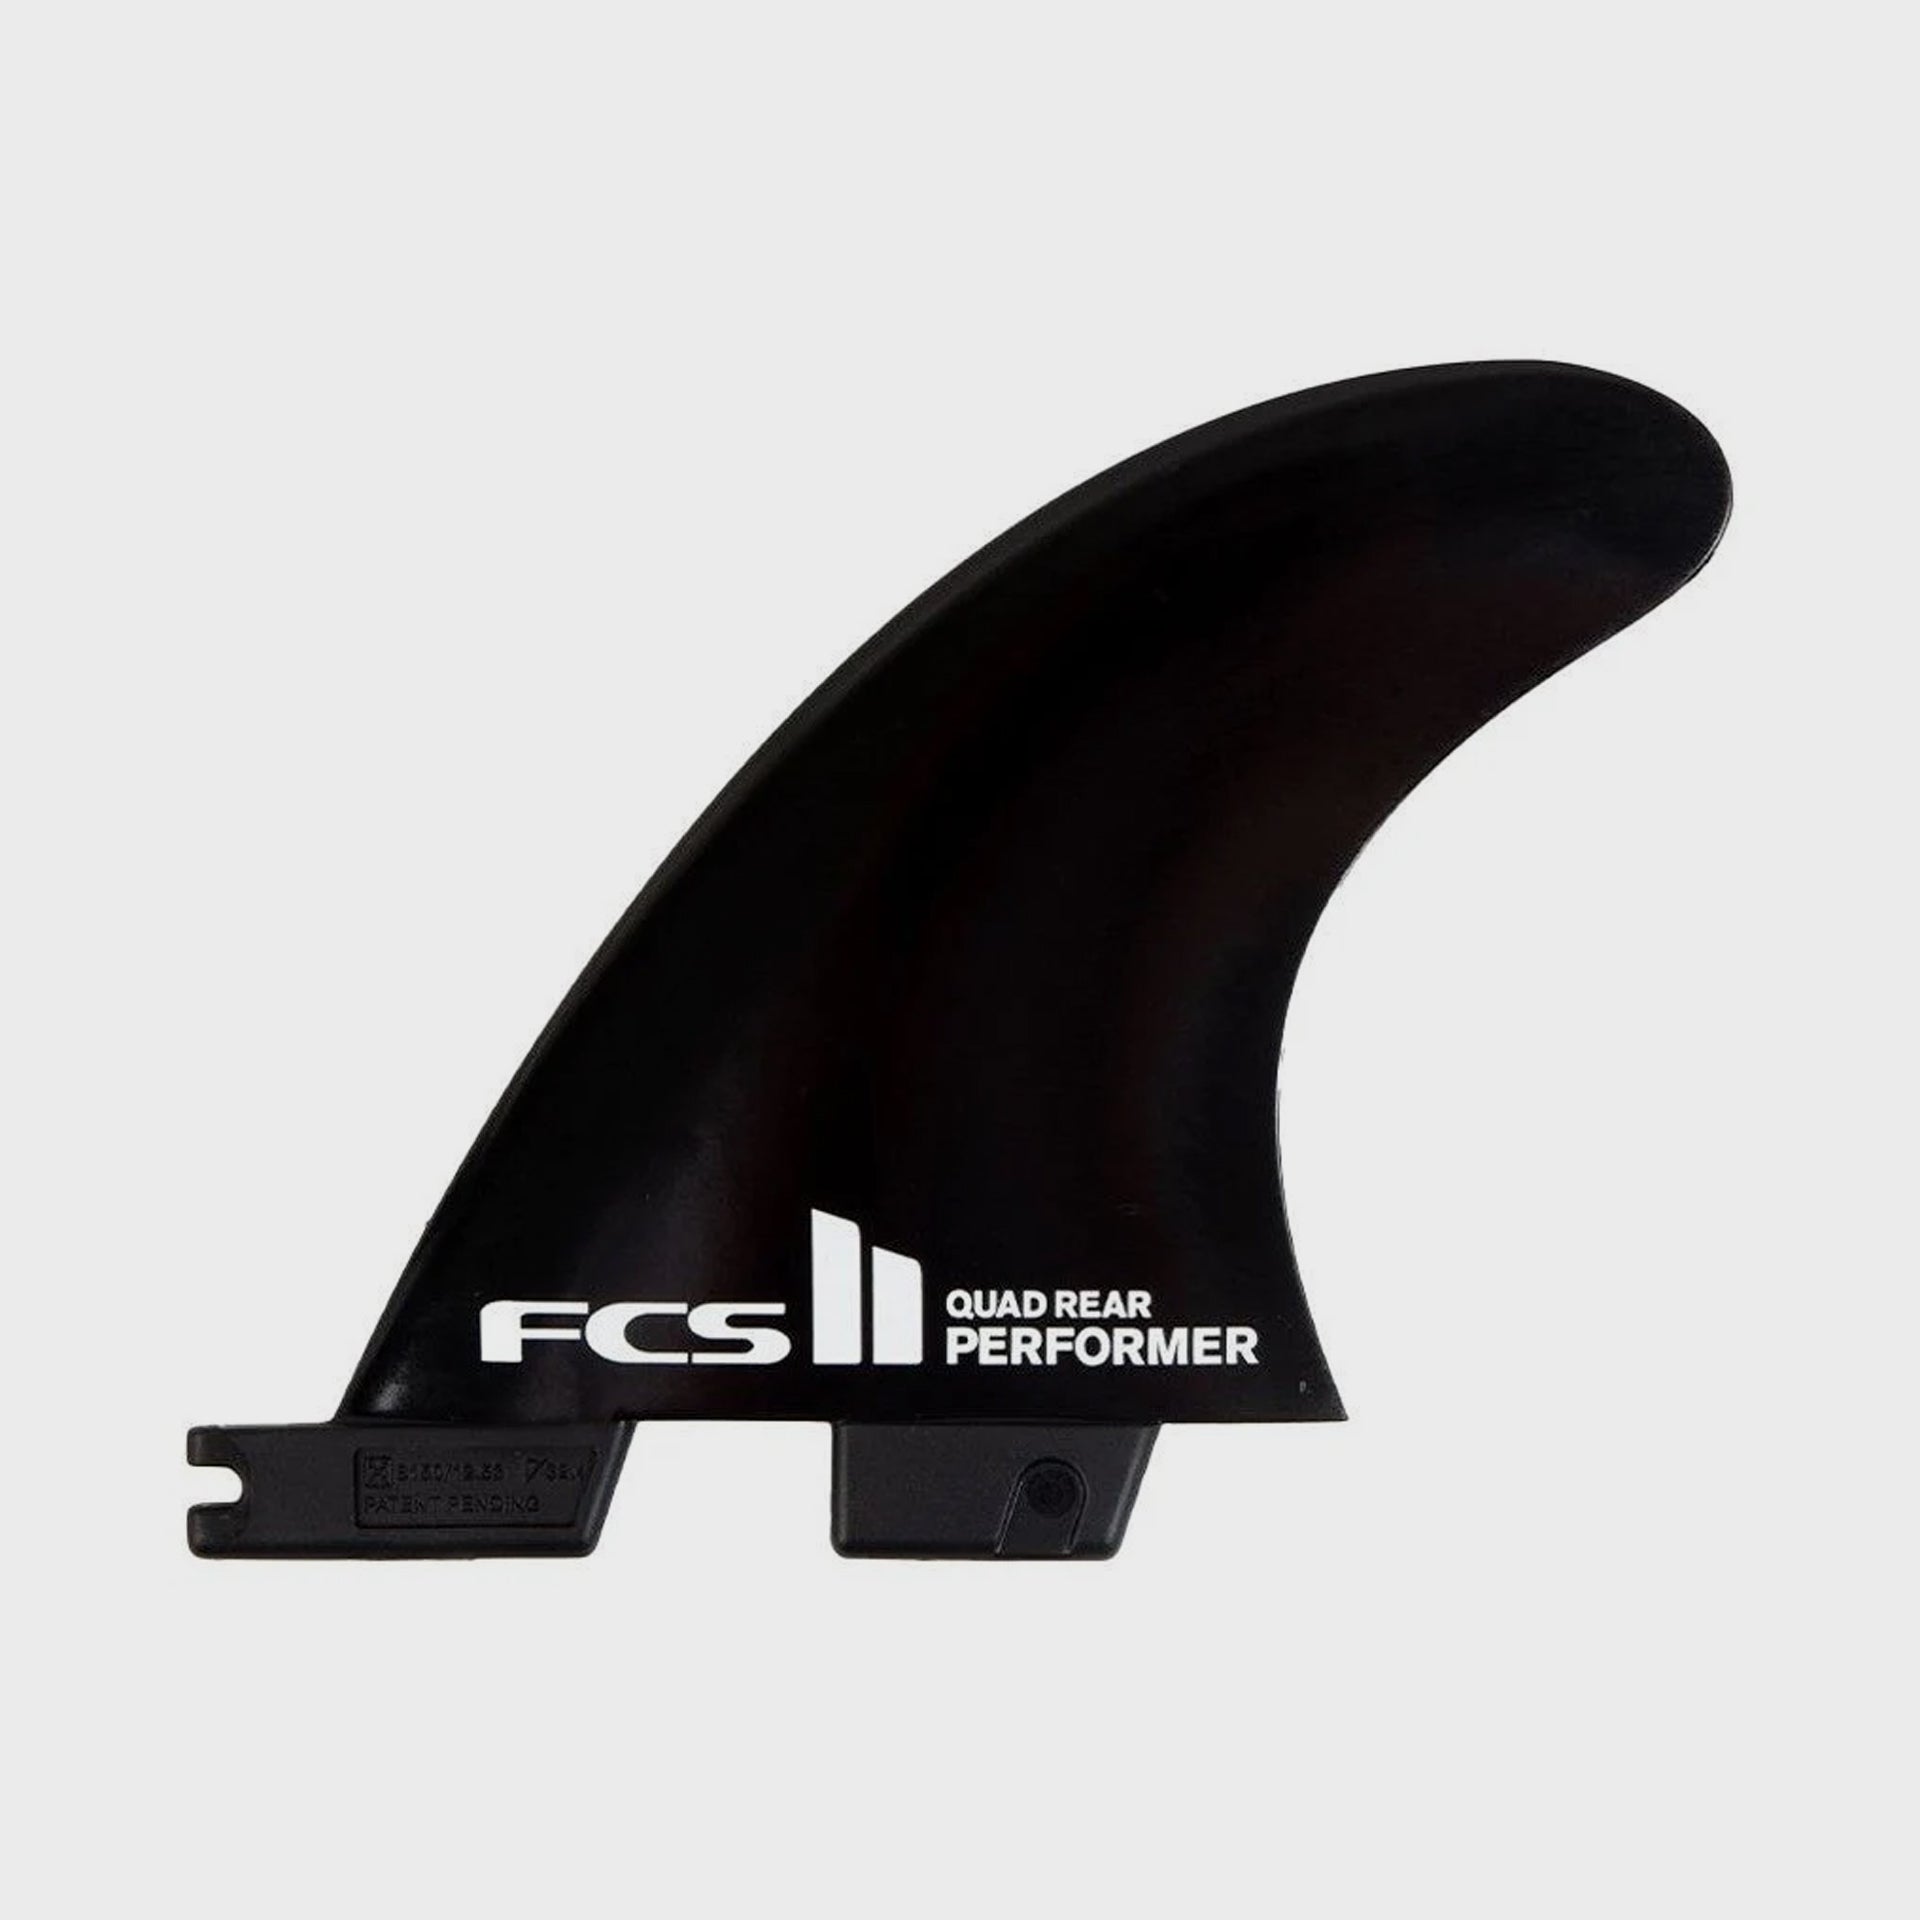 FCS Performer FCS II Quad Rear Fin - Medium - Black